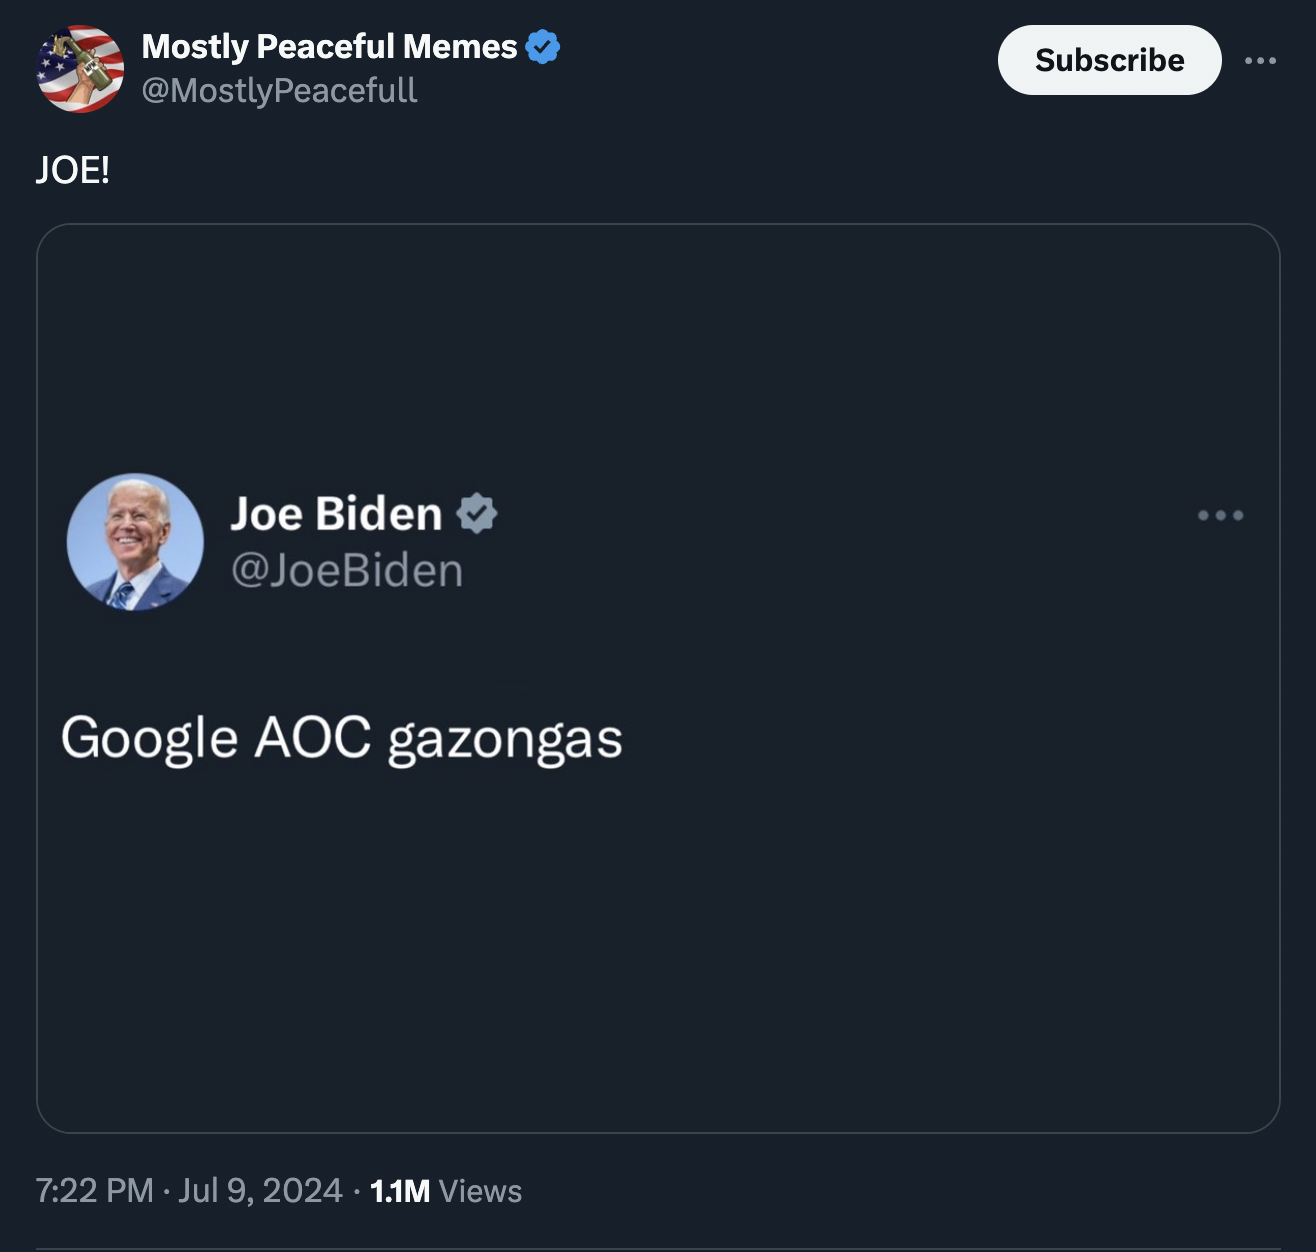 screenshot - Joe! Mostly Peaceful Memes Joe Biden Google Aoc gazongas 1.1M Views Subscribe